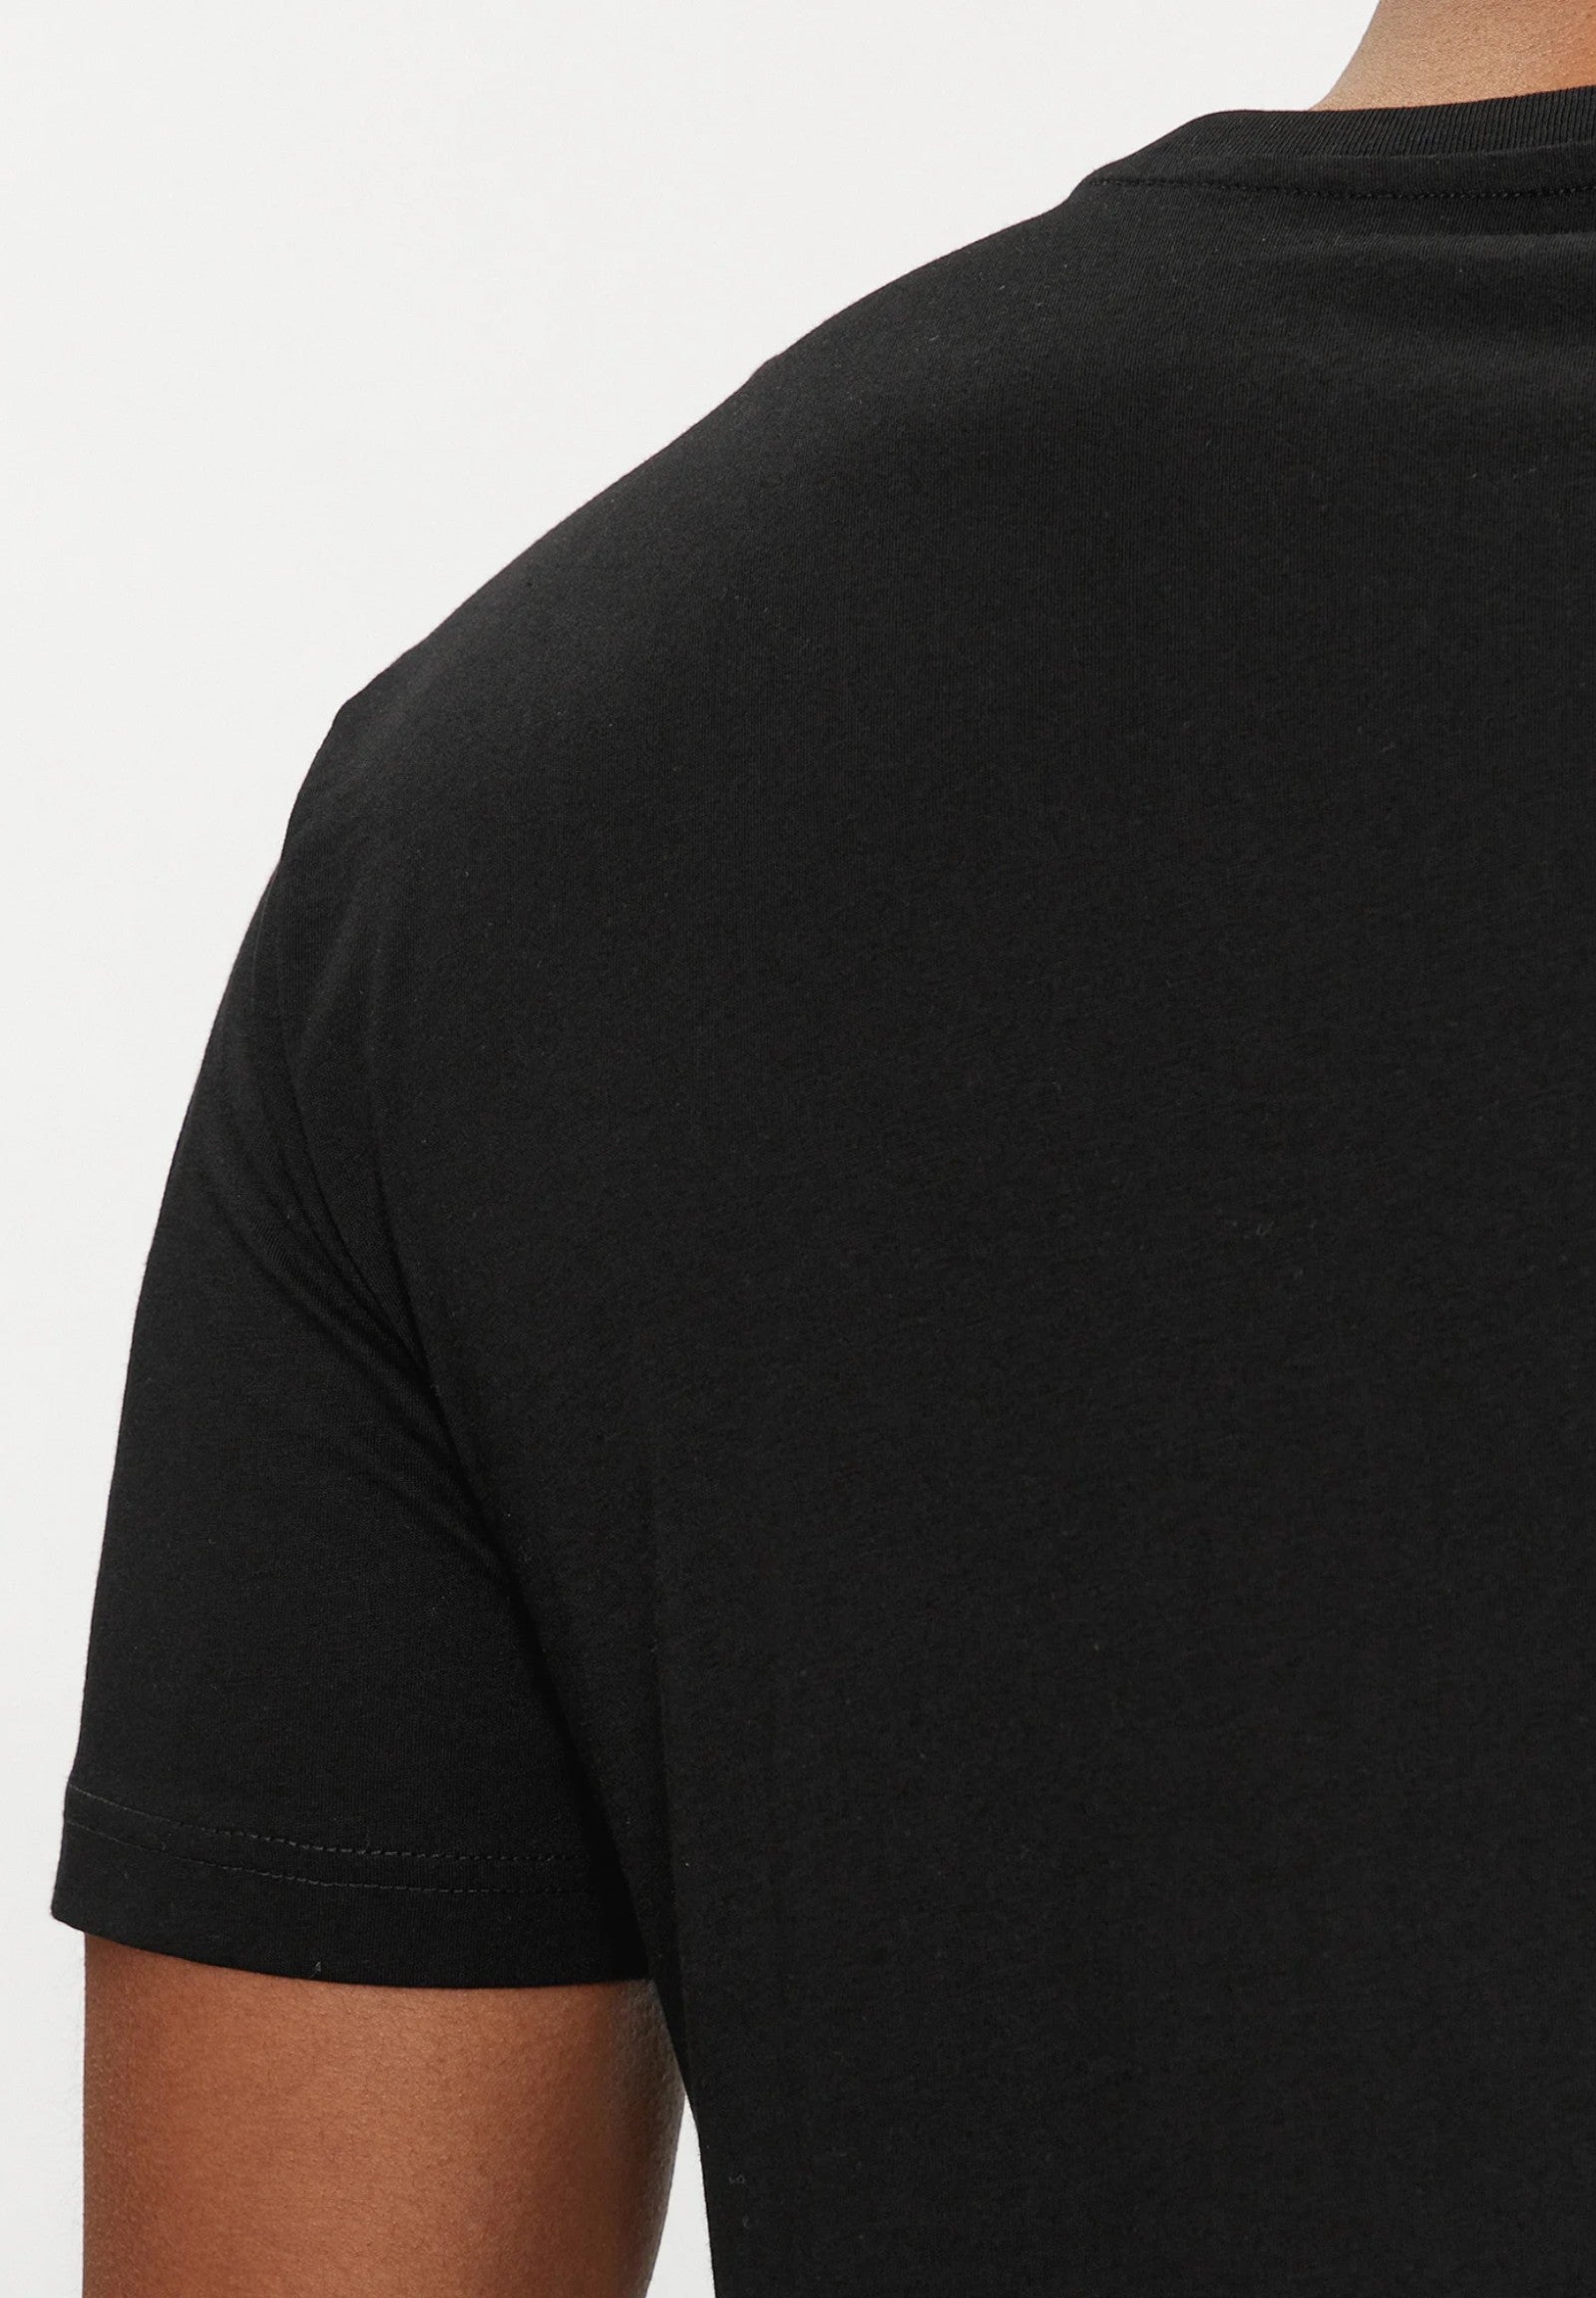 Ea7 Emporio Armani T-Shirt* 3dpt81 Black